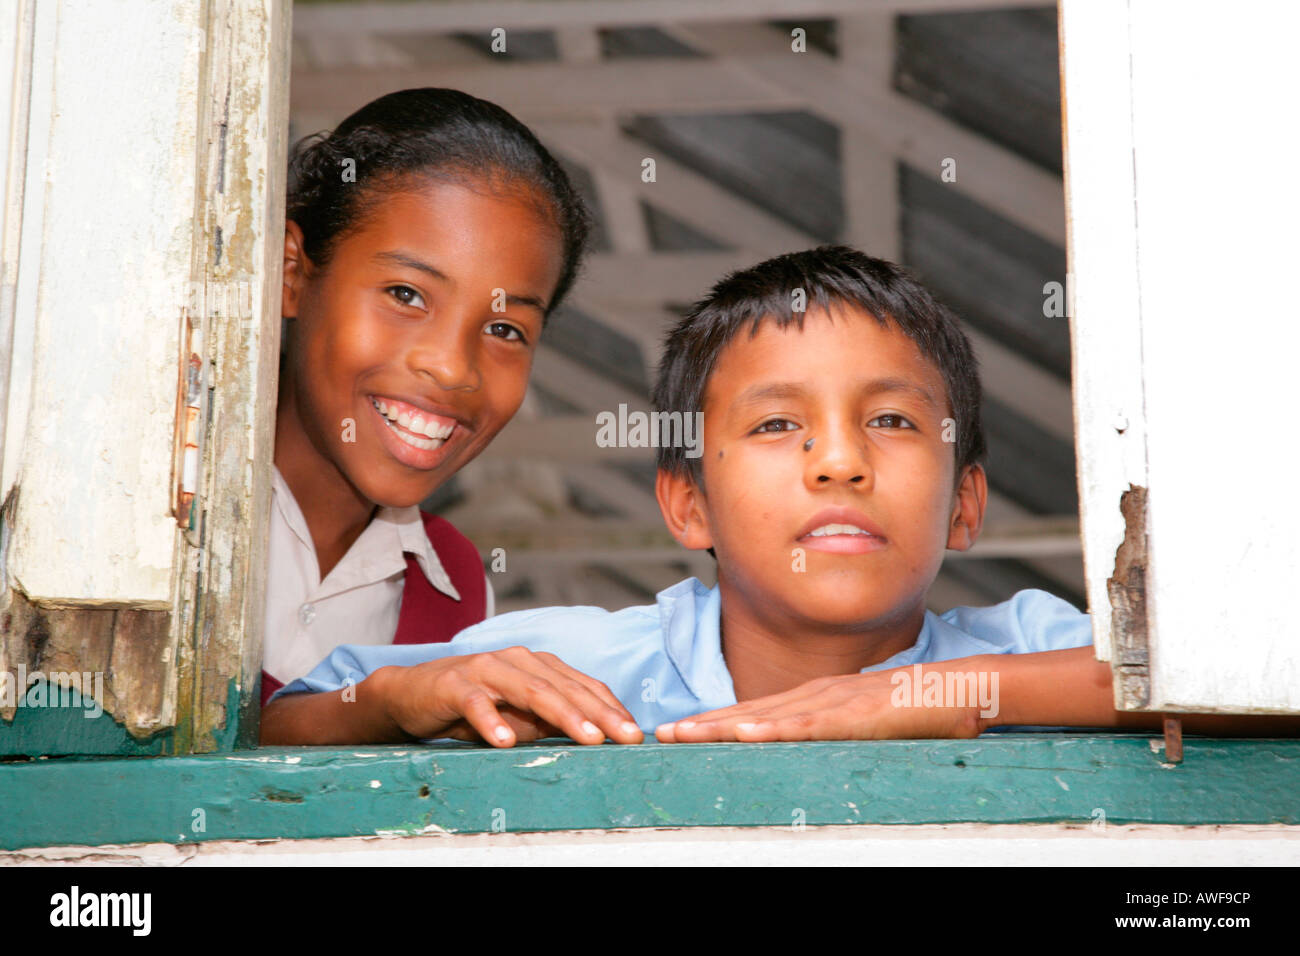 Pupils in uniform during break, Amerindians, tribe of the Arawak, Santa Mission, Guyana, South America Stock Photo